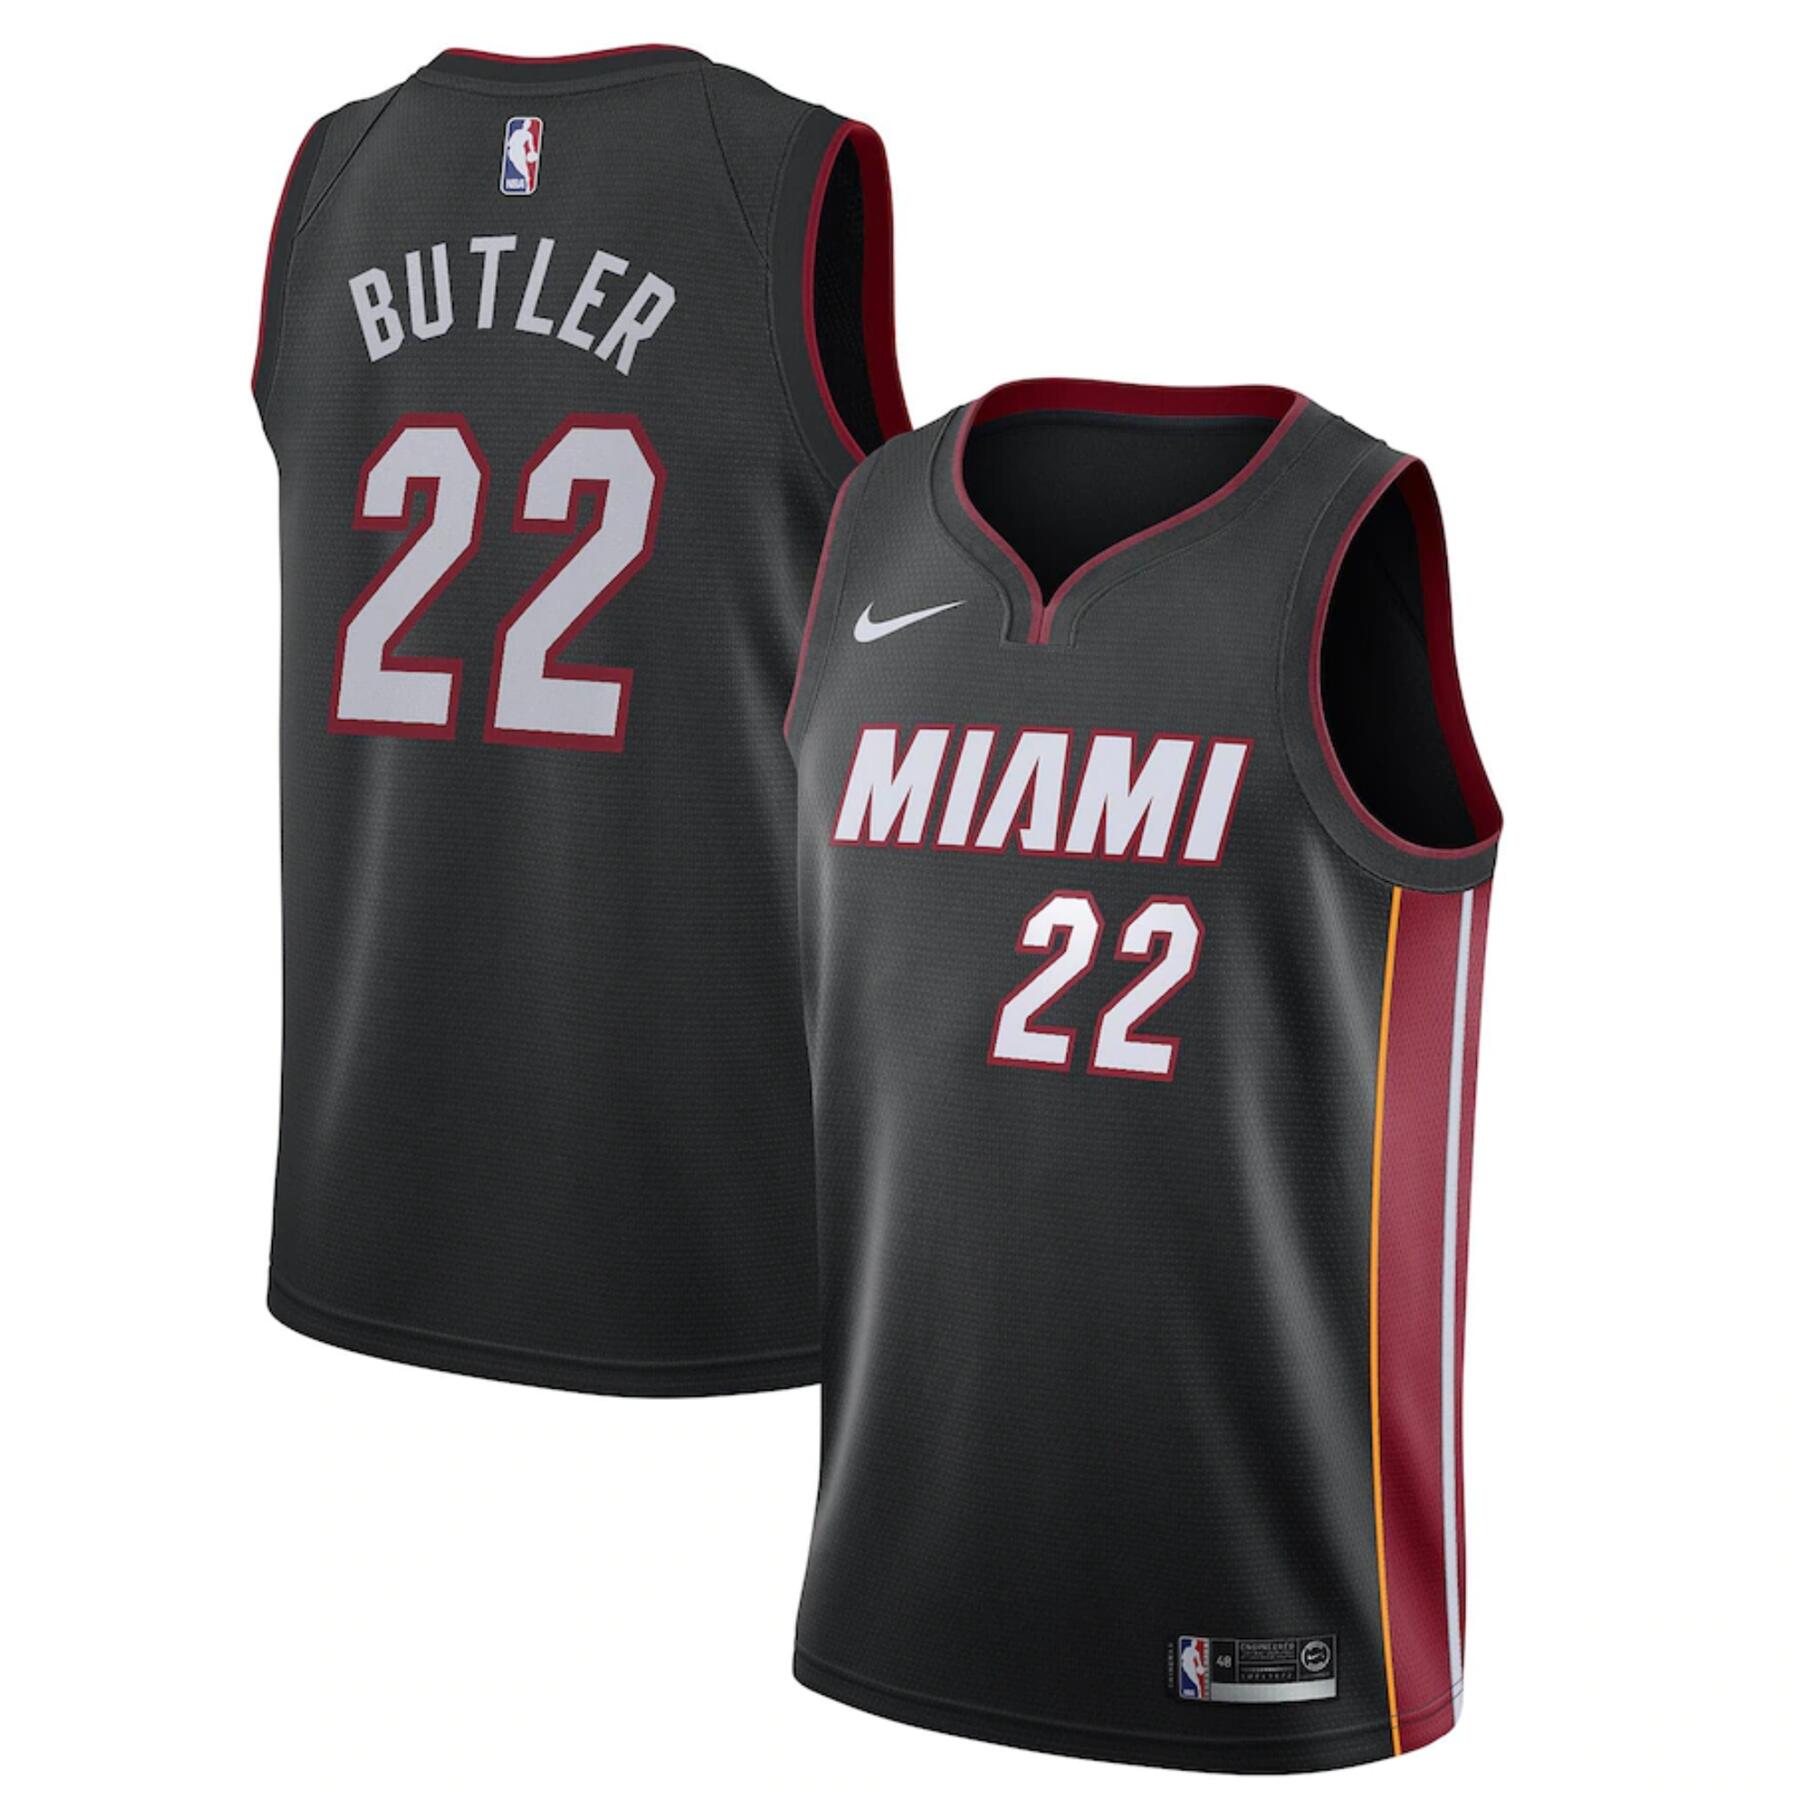 Miami Heat NBA Jersey Men's Nike Butler 22 Icon Basketball Vest 1/3